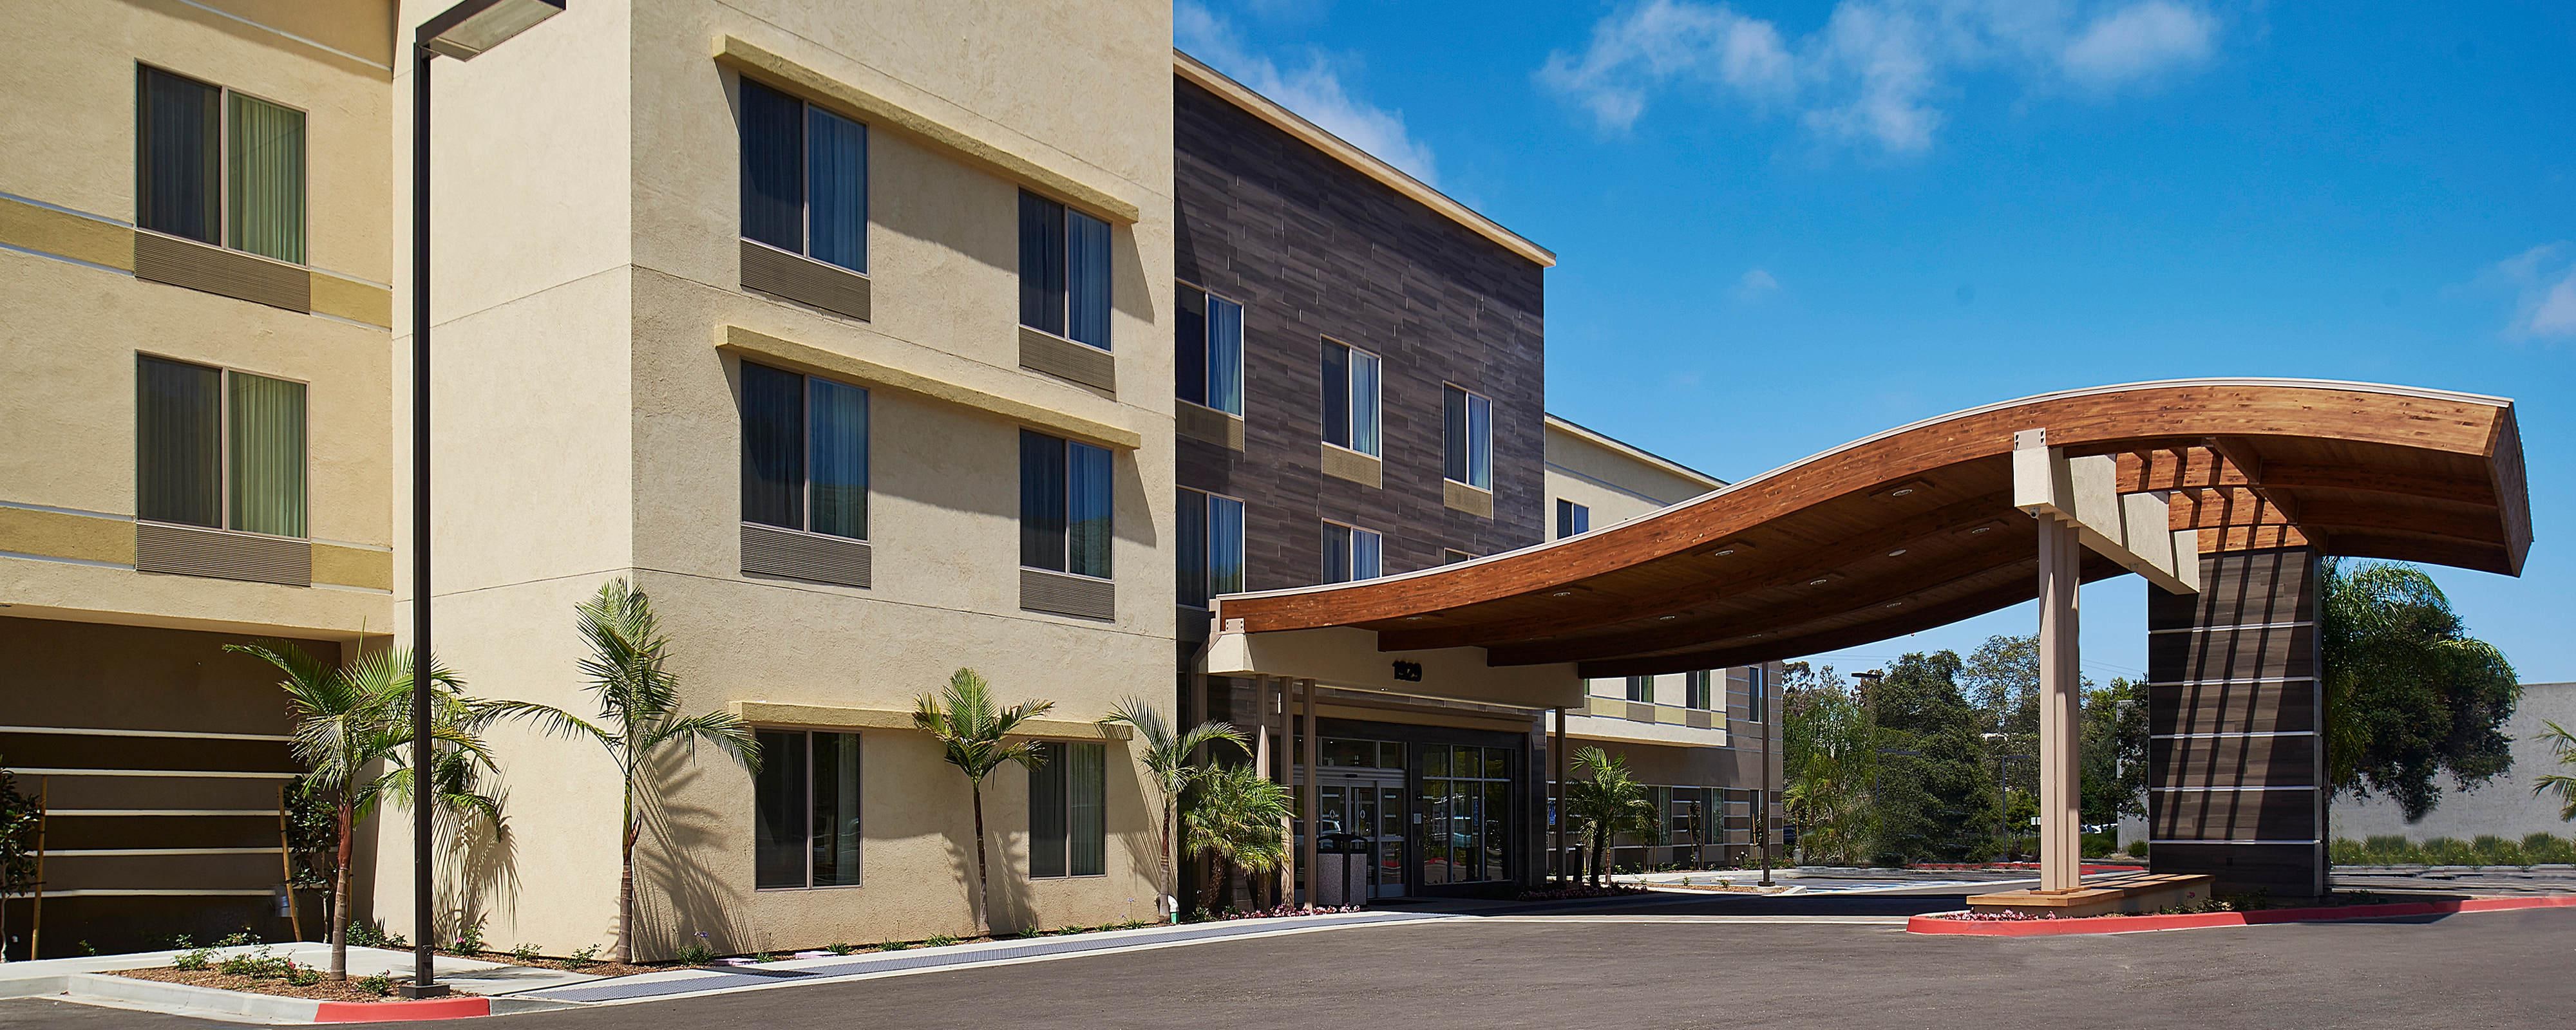 Fairfield Inn Suites San Diego Carlsbad Hotel Ca